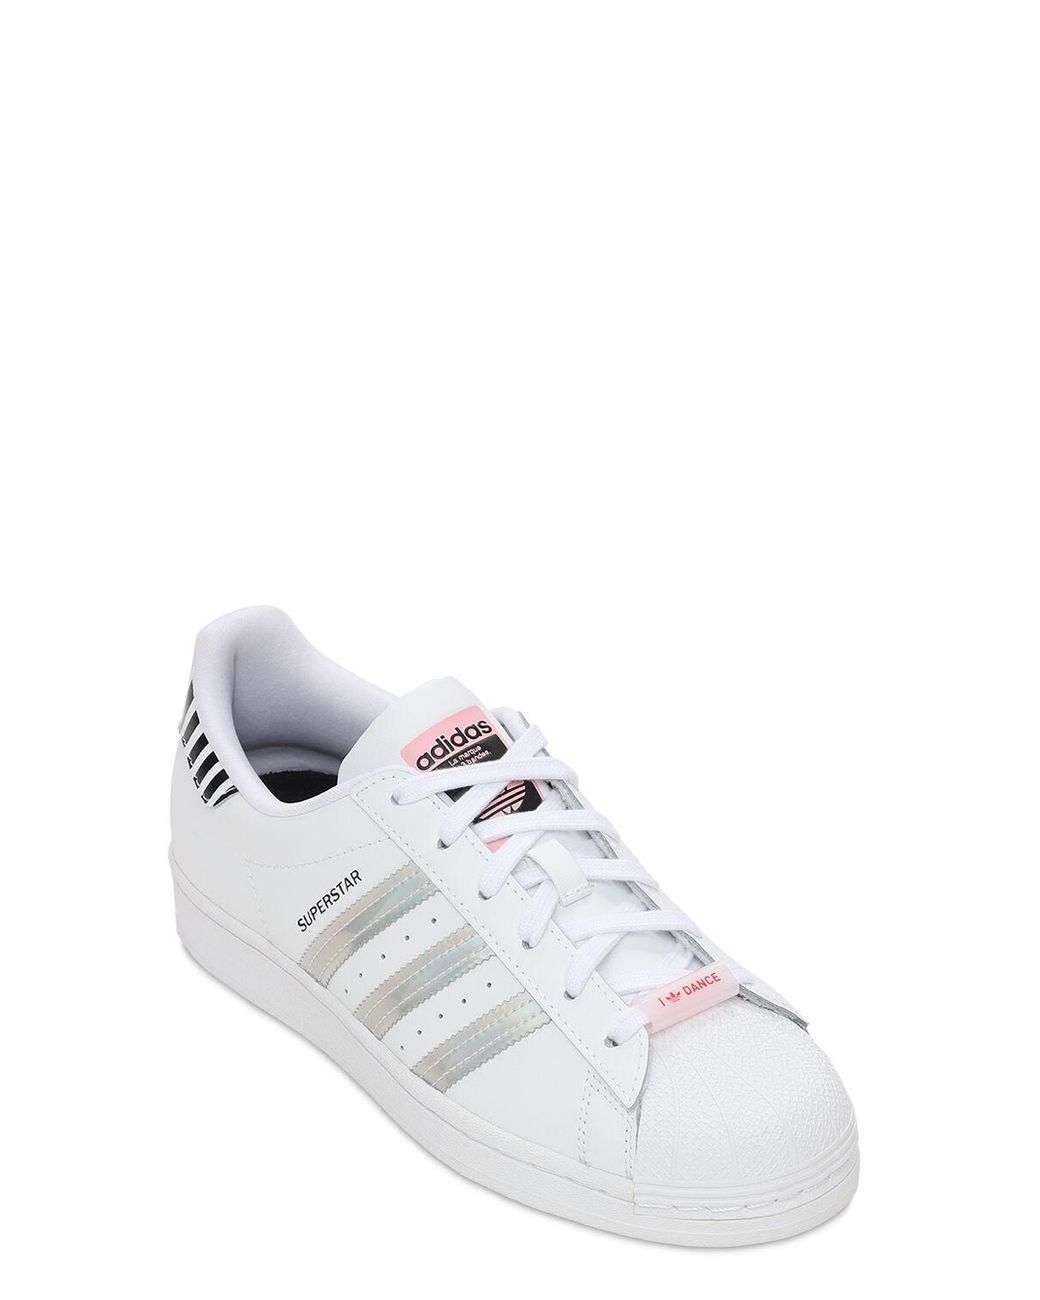 adidas Originals Zebra Superstar Bold Sneakers in White | Lyst UK